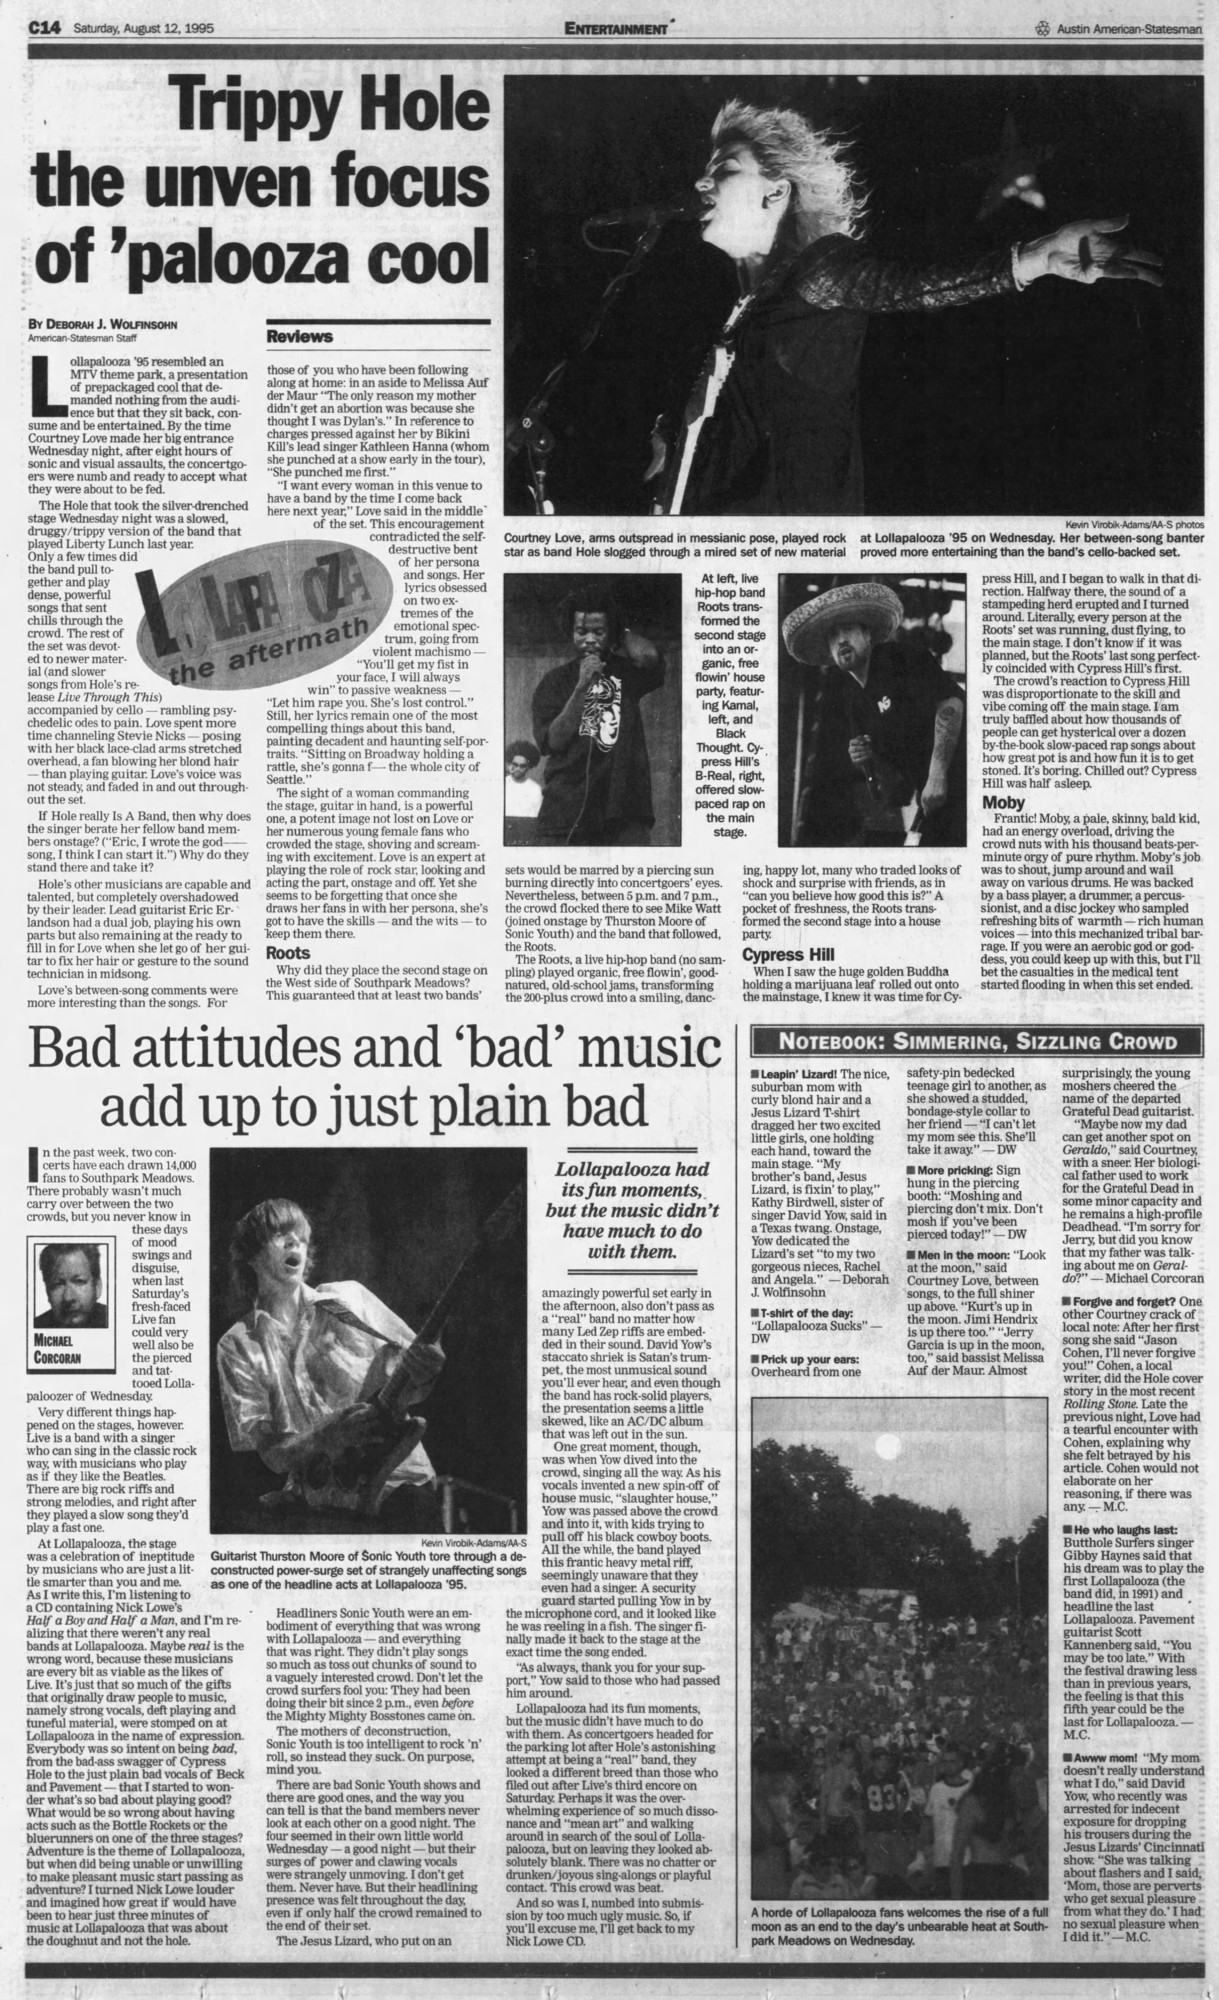 08-09-1995 Southpark Meadows | Hole Archive